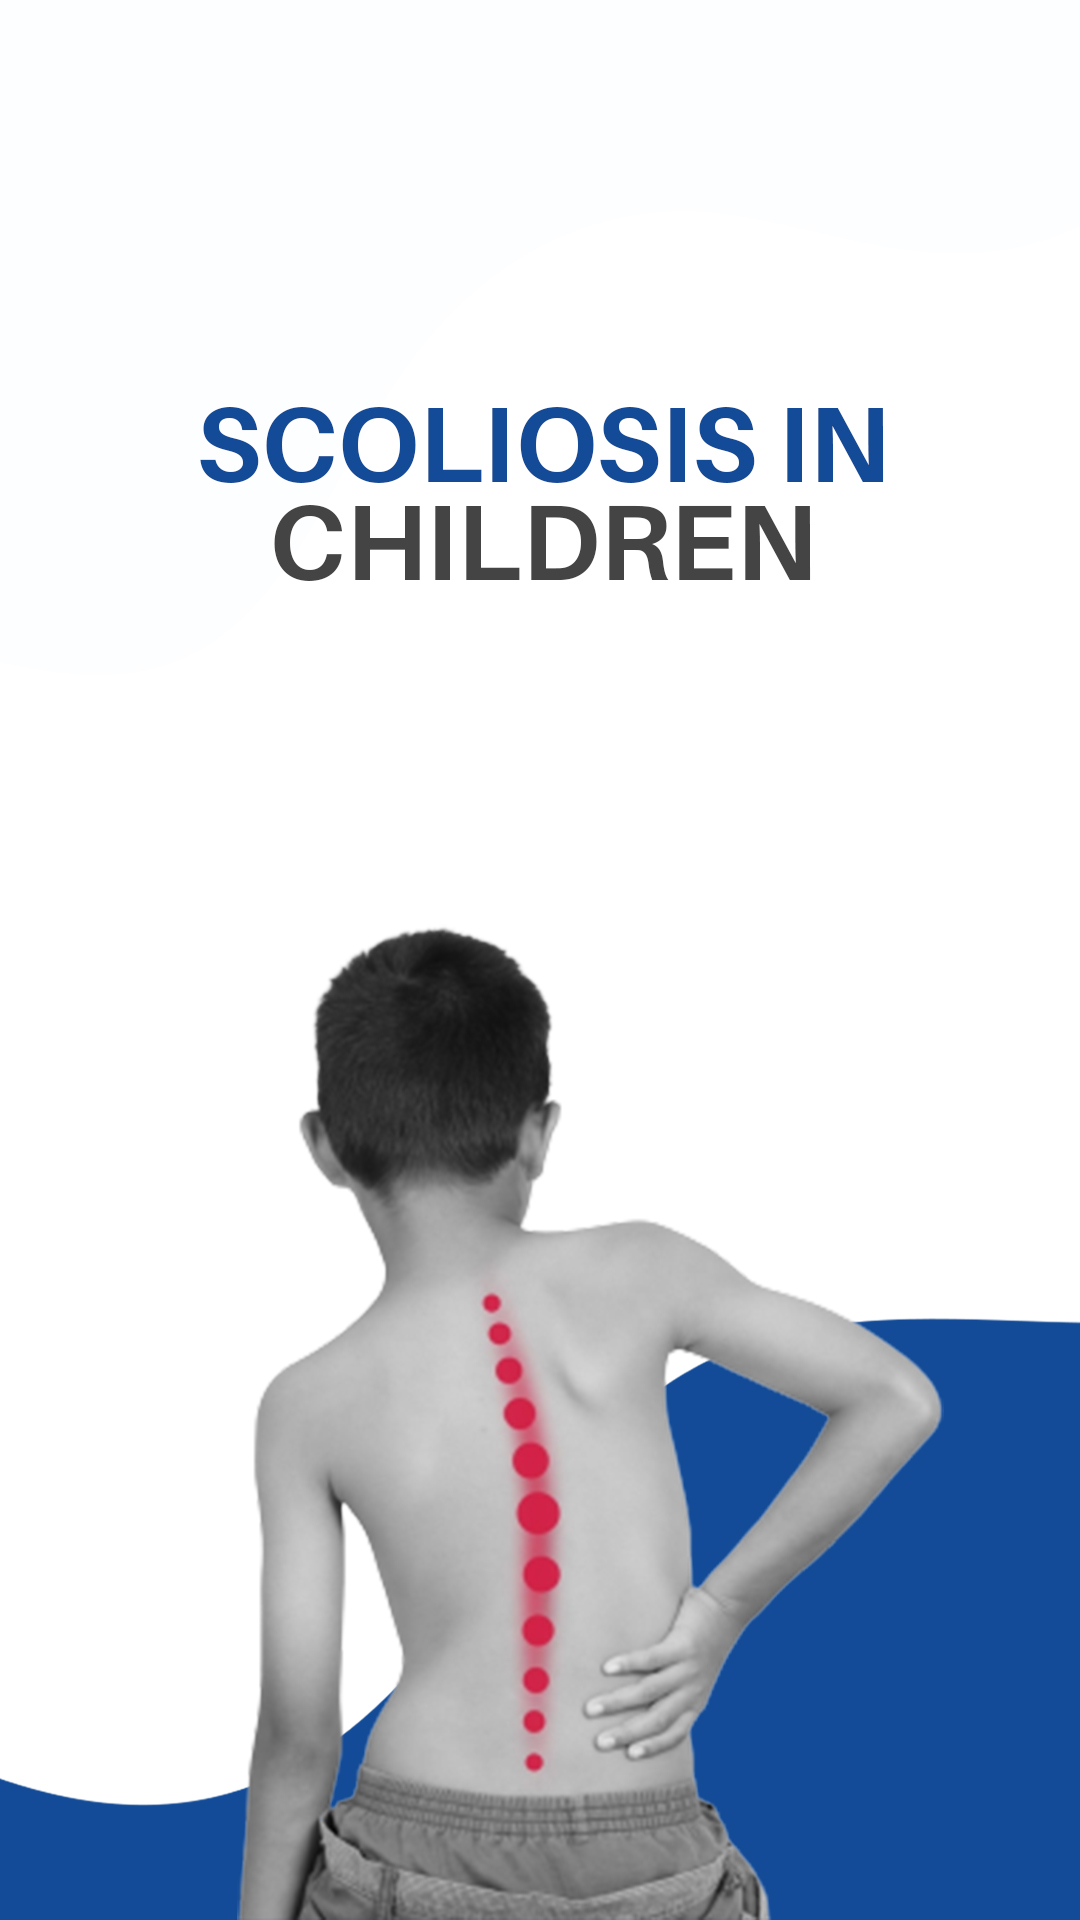 Scoliosis in children